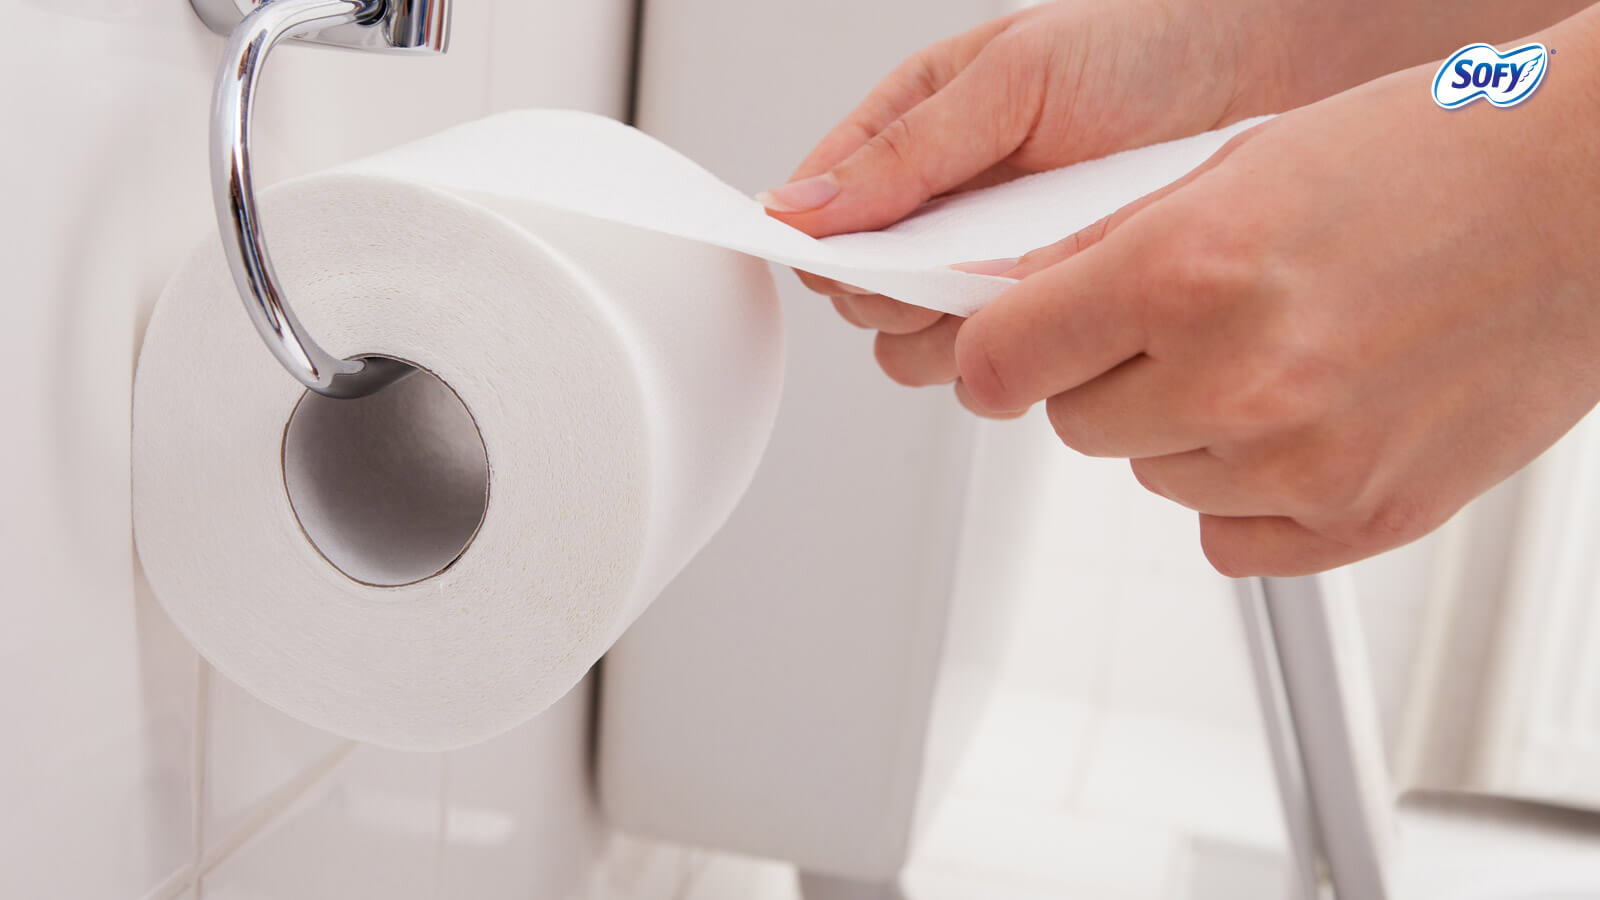 How to Use a Sanitary Napkin/Pad